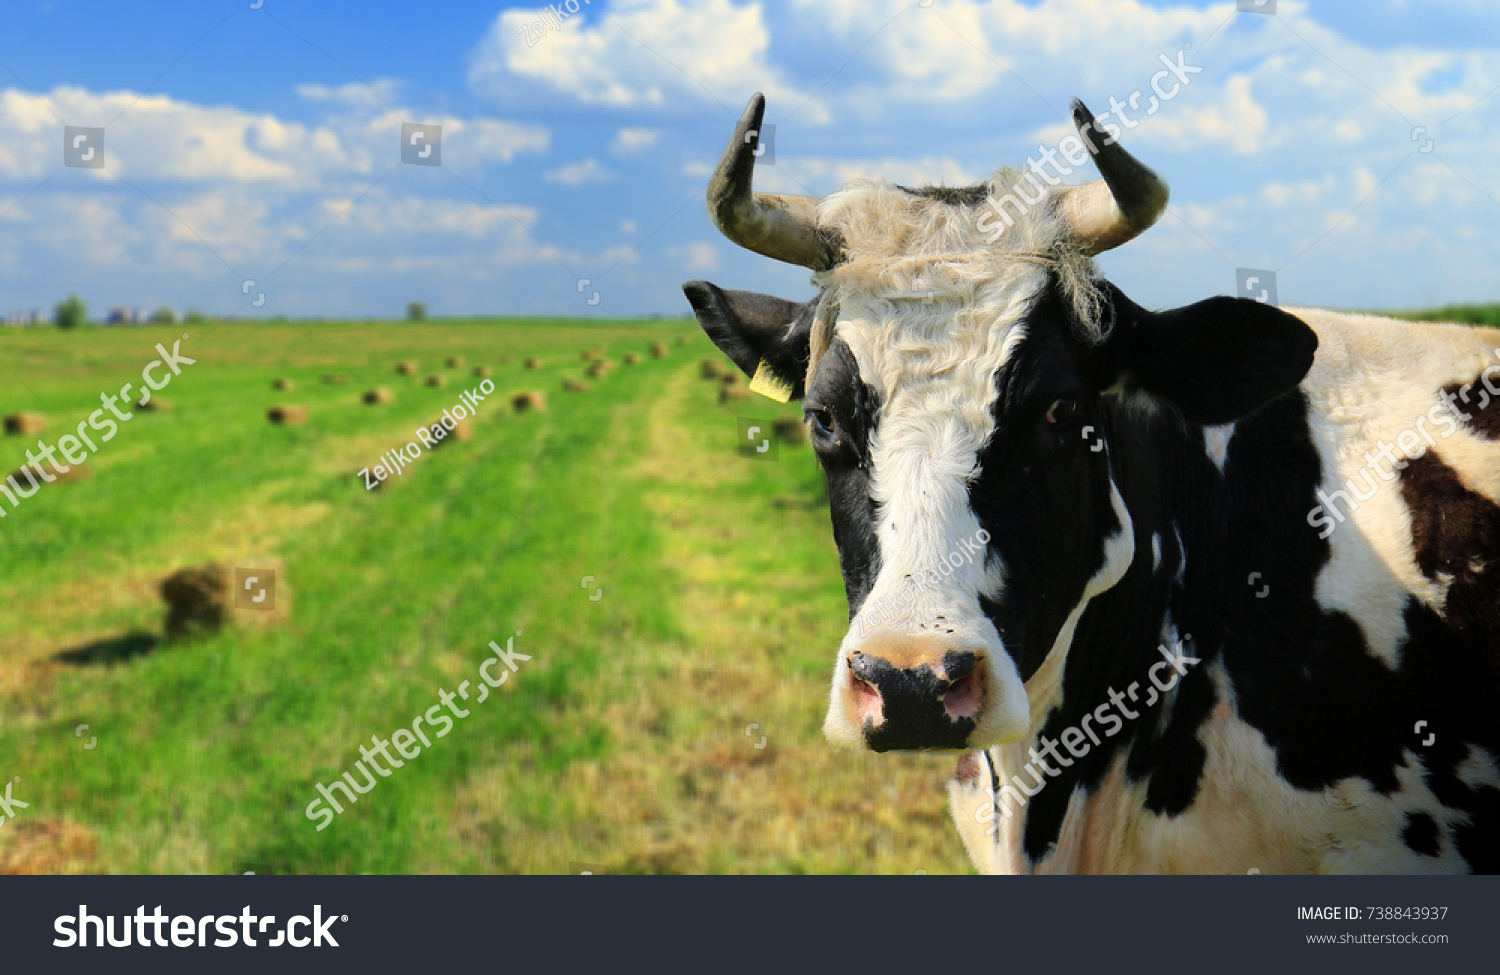 powerpoint-template-cartoon-cows-cow-okpplkuko